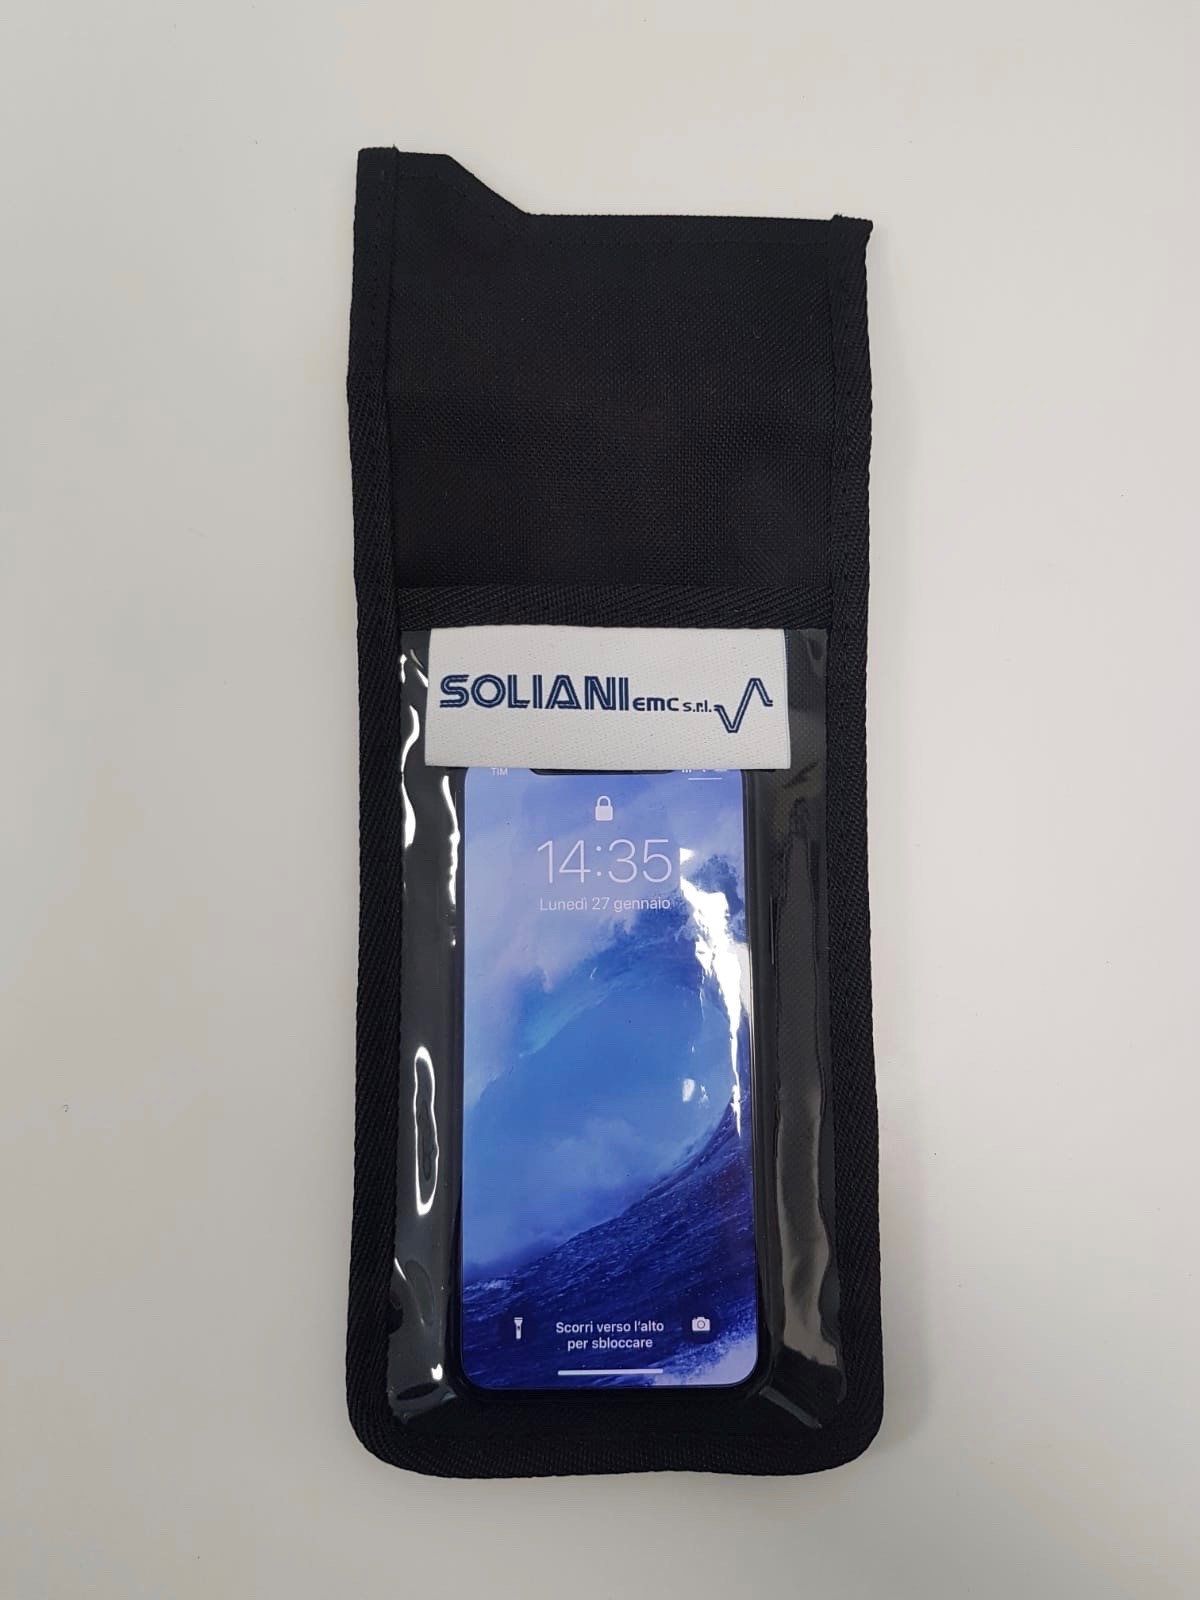 Faraday Bags - Soliani EMC